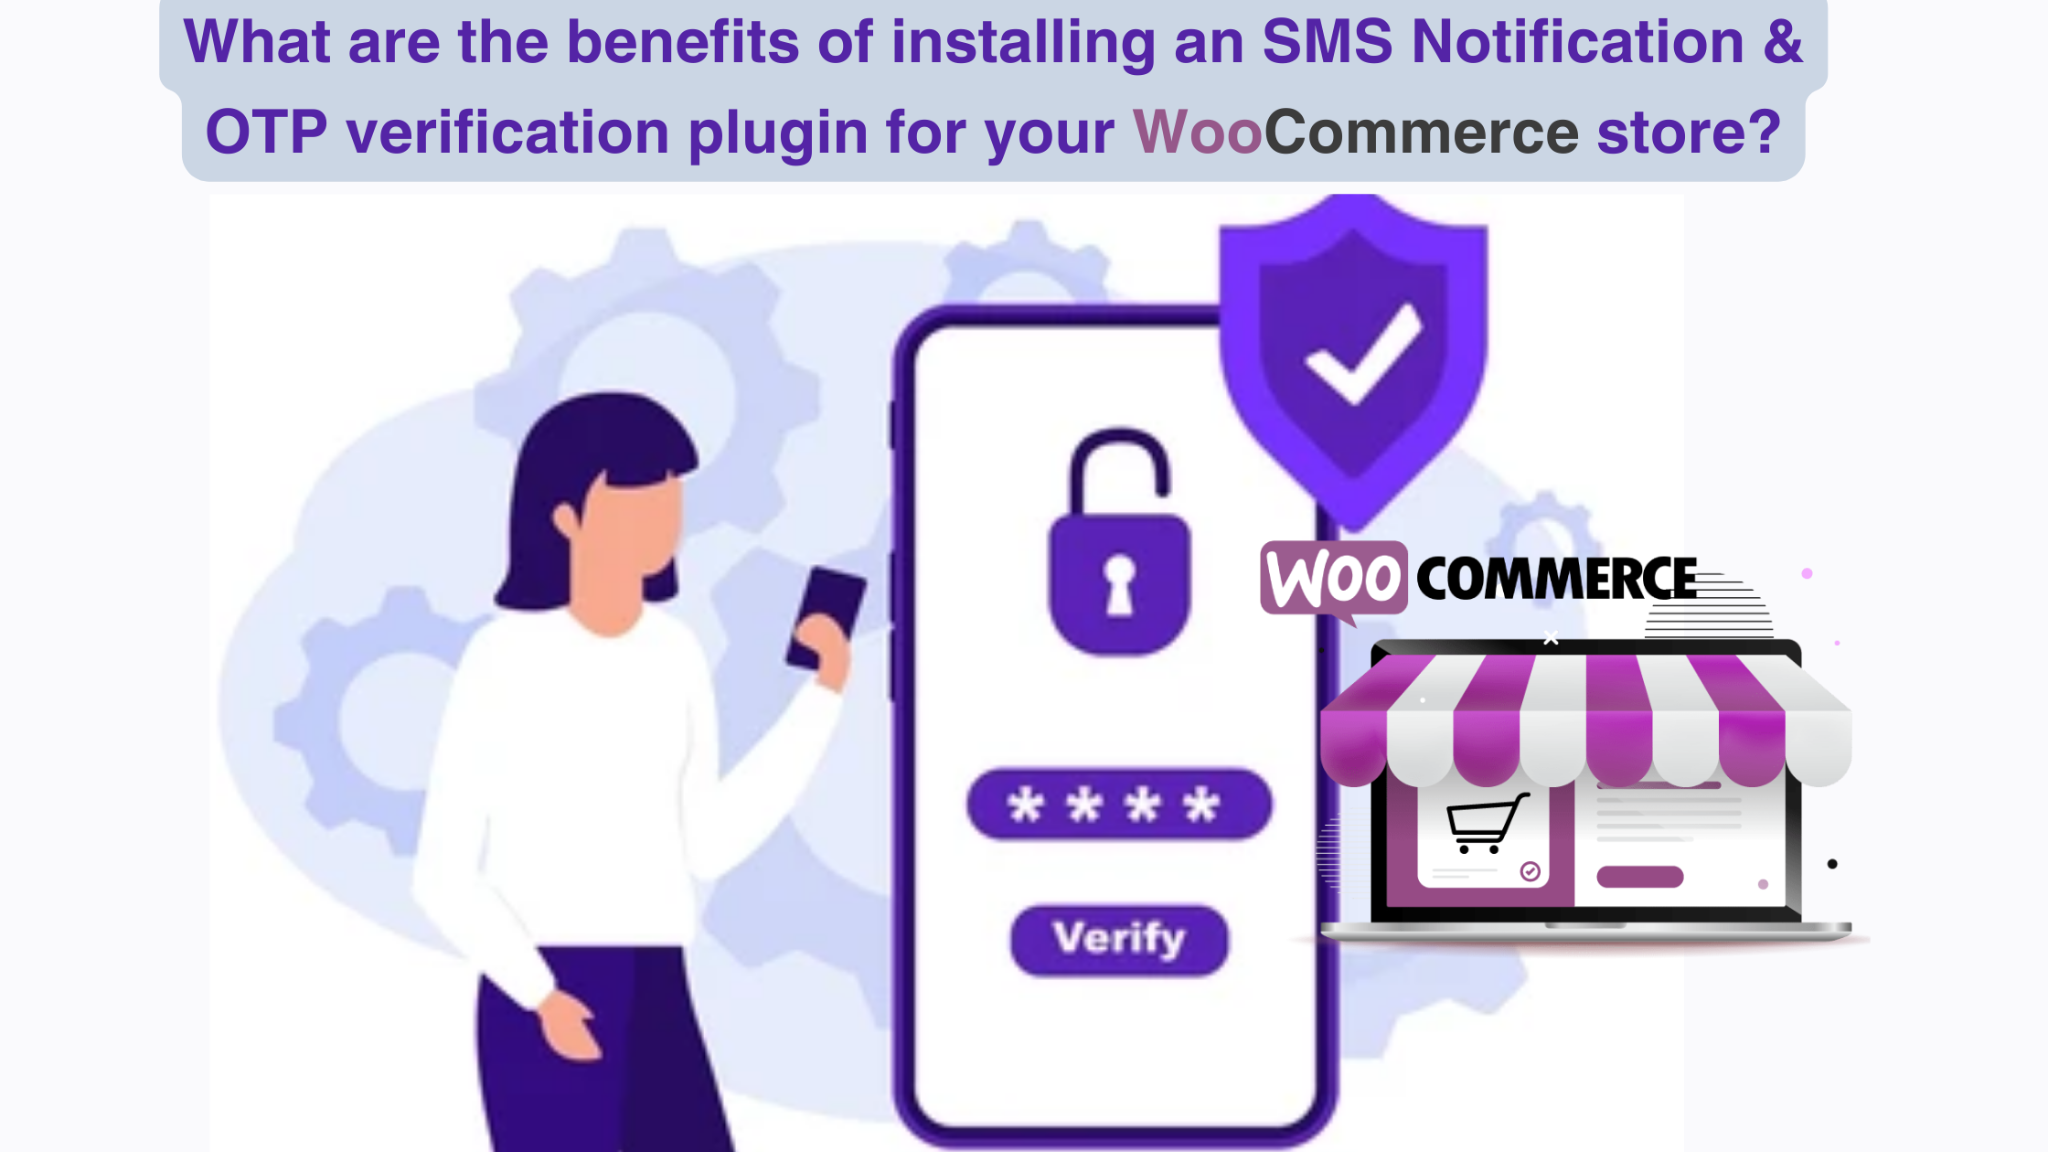 SMS Notification & OTP verification plugin